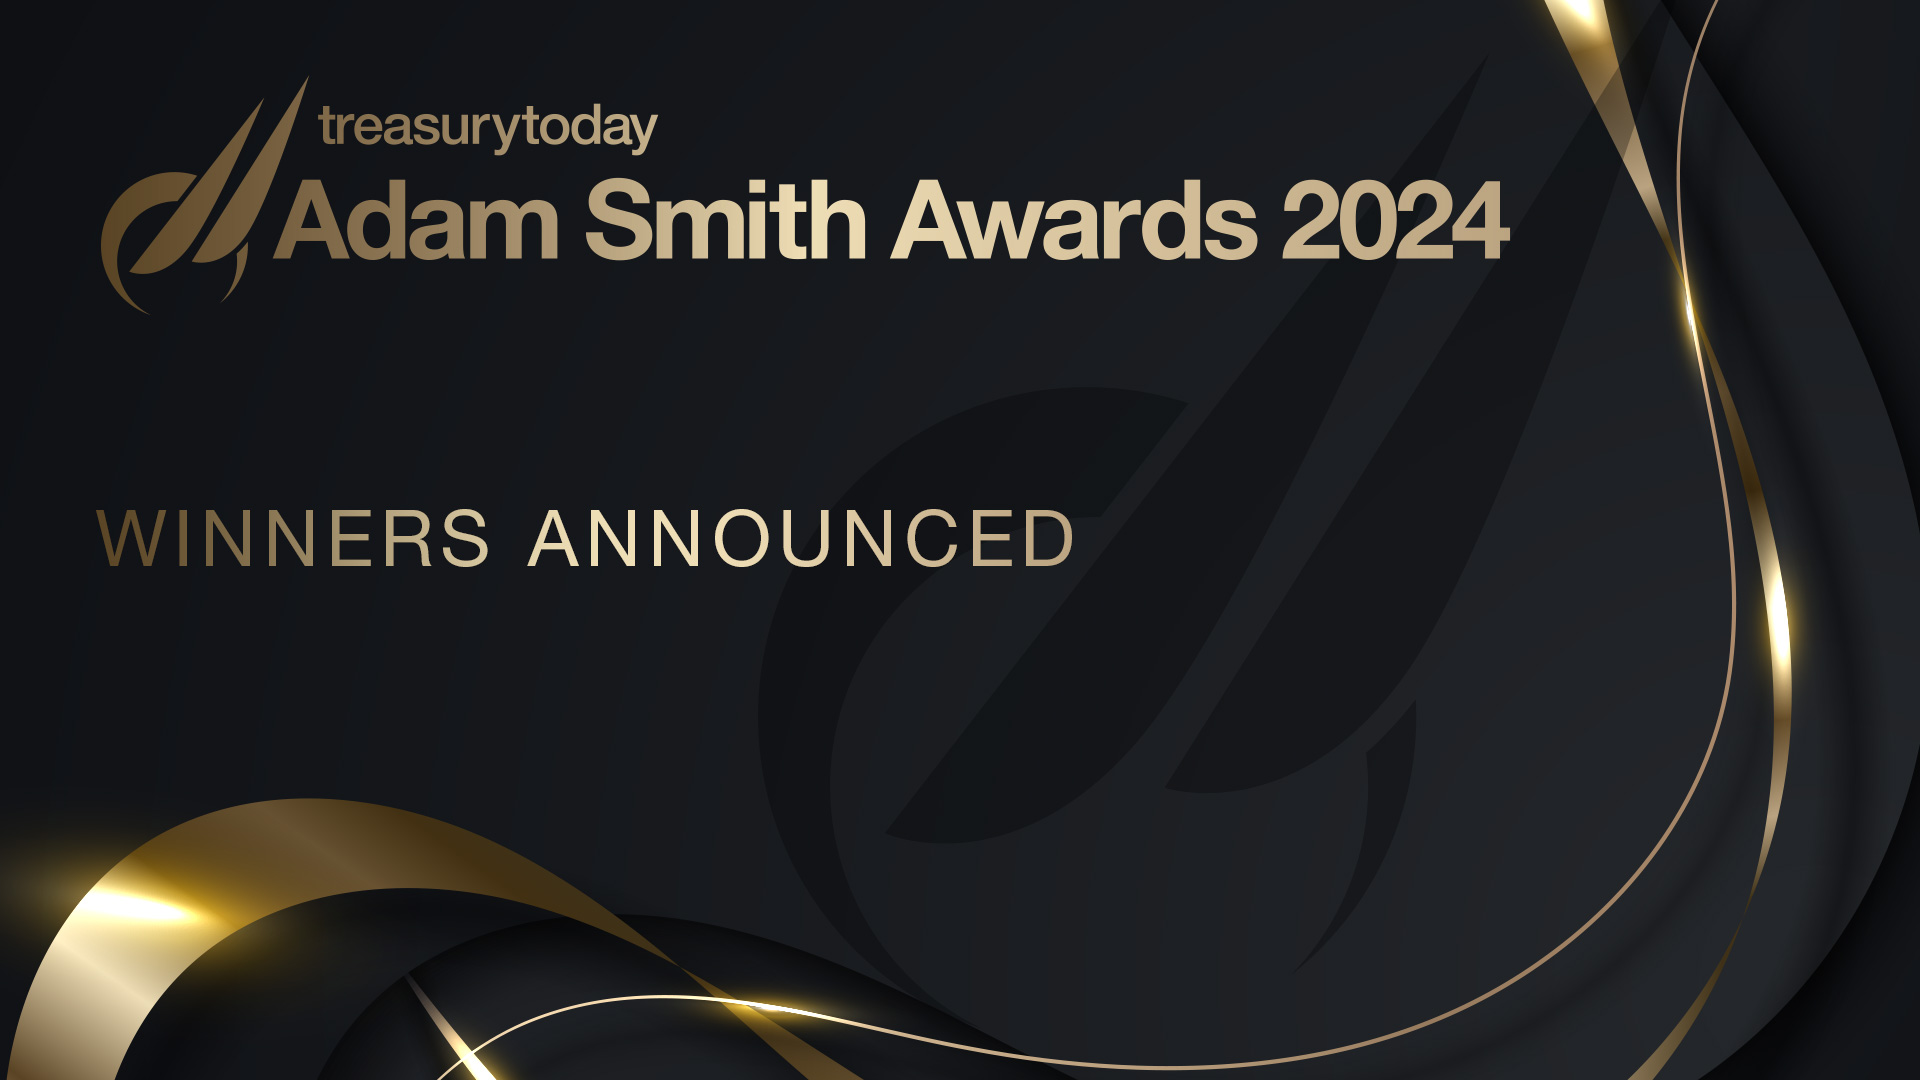 Adam Smith Awards 2024 winners announced